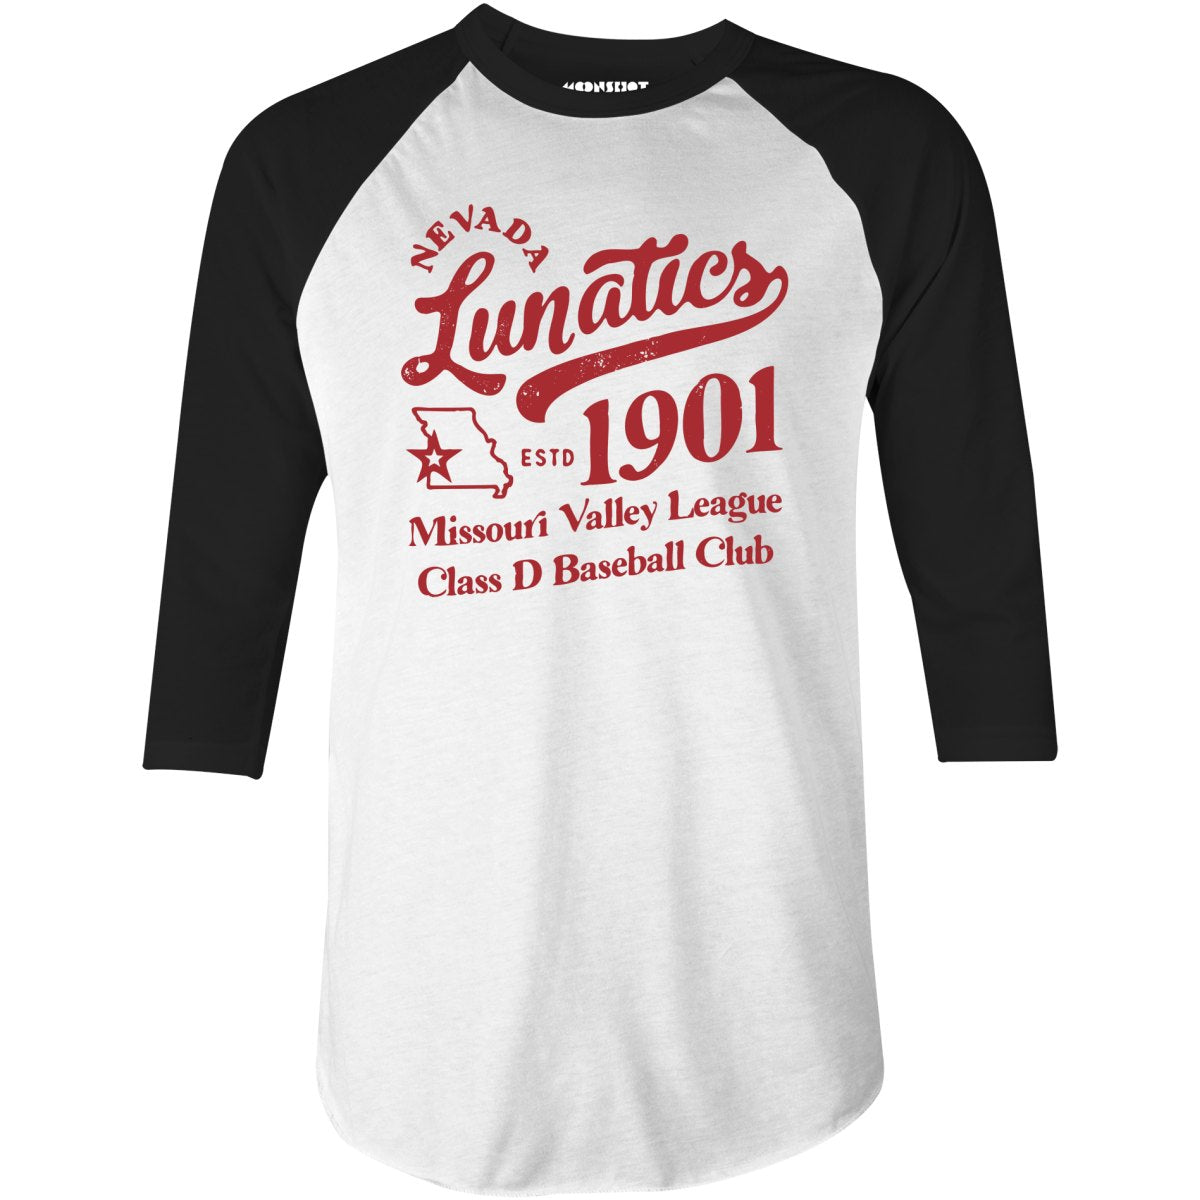 Nevada Lunatics - Missouri - Vintage Defunct Baseball Teams - 3/4 Sleeve Raglan T-Shirt